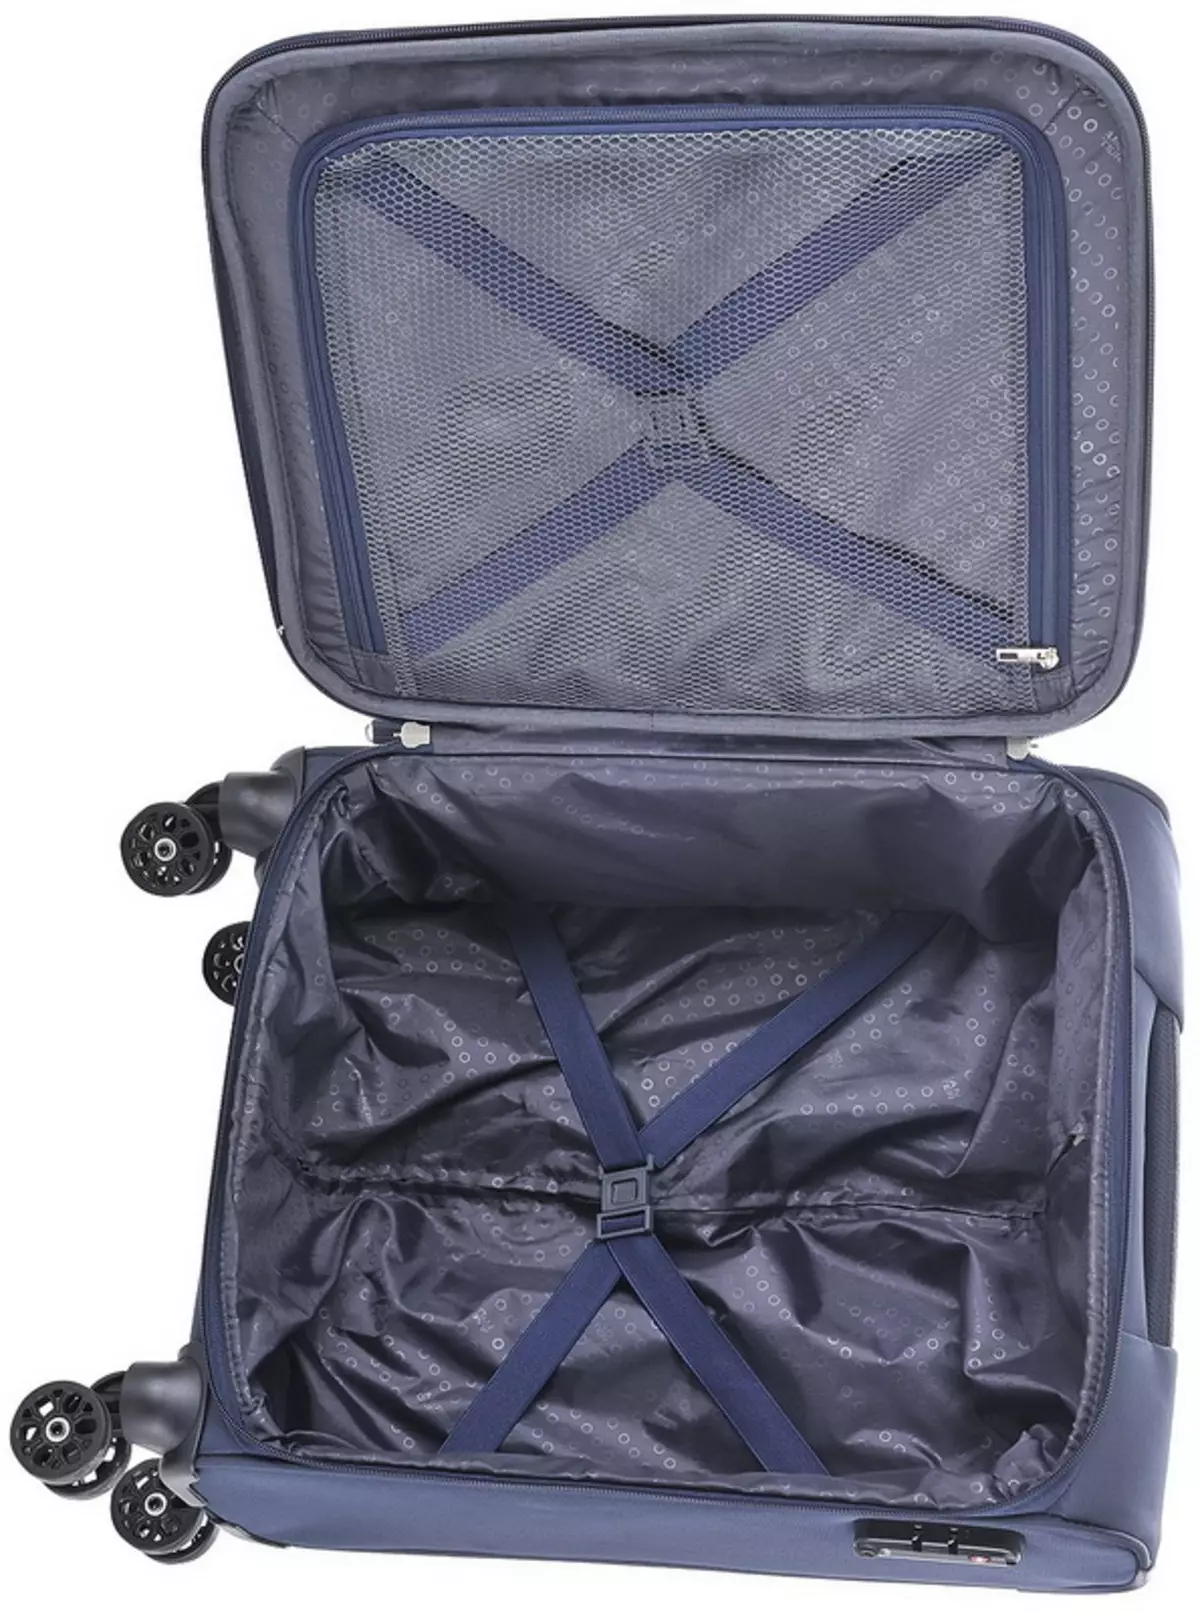 Suitcases ხელის ბარგის: მათი ზომა თვითმფრინავებში, მცირე suitcases 55x40x20 დისკები და სხვა, რეიტინგი საუკეთესო სინათლის მოდელები 13627_31